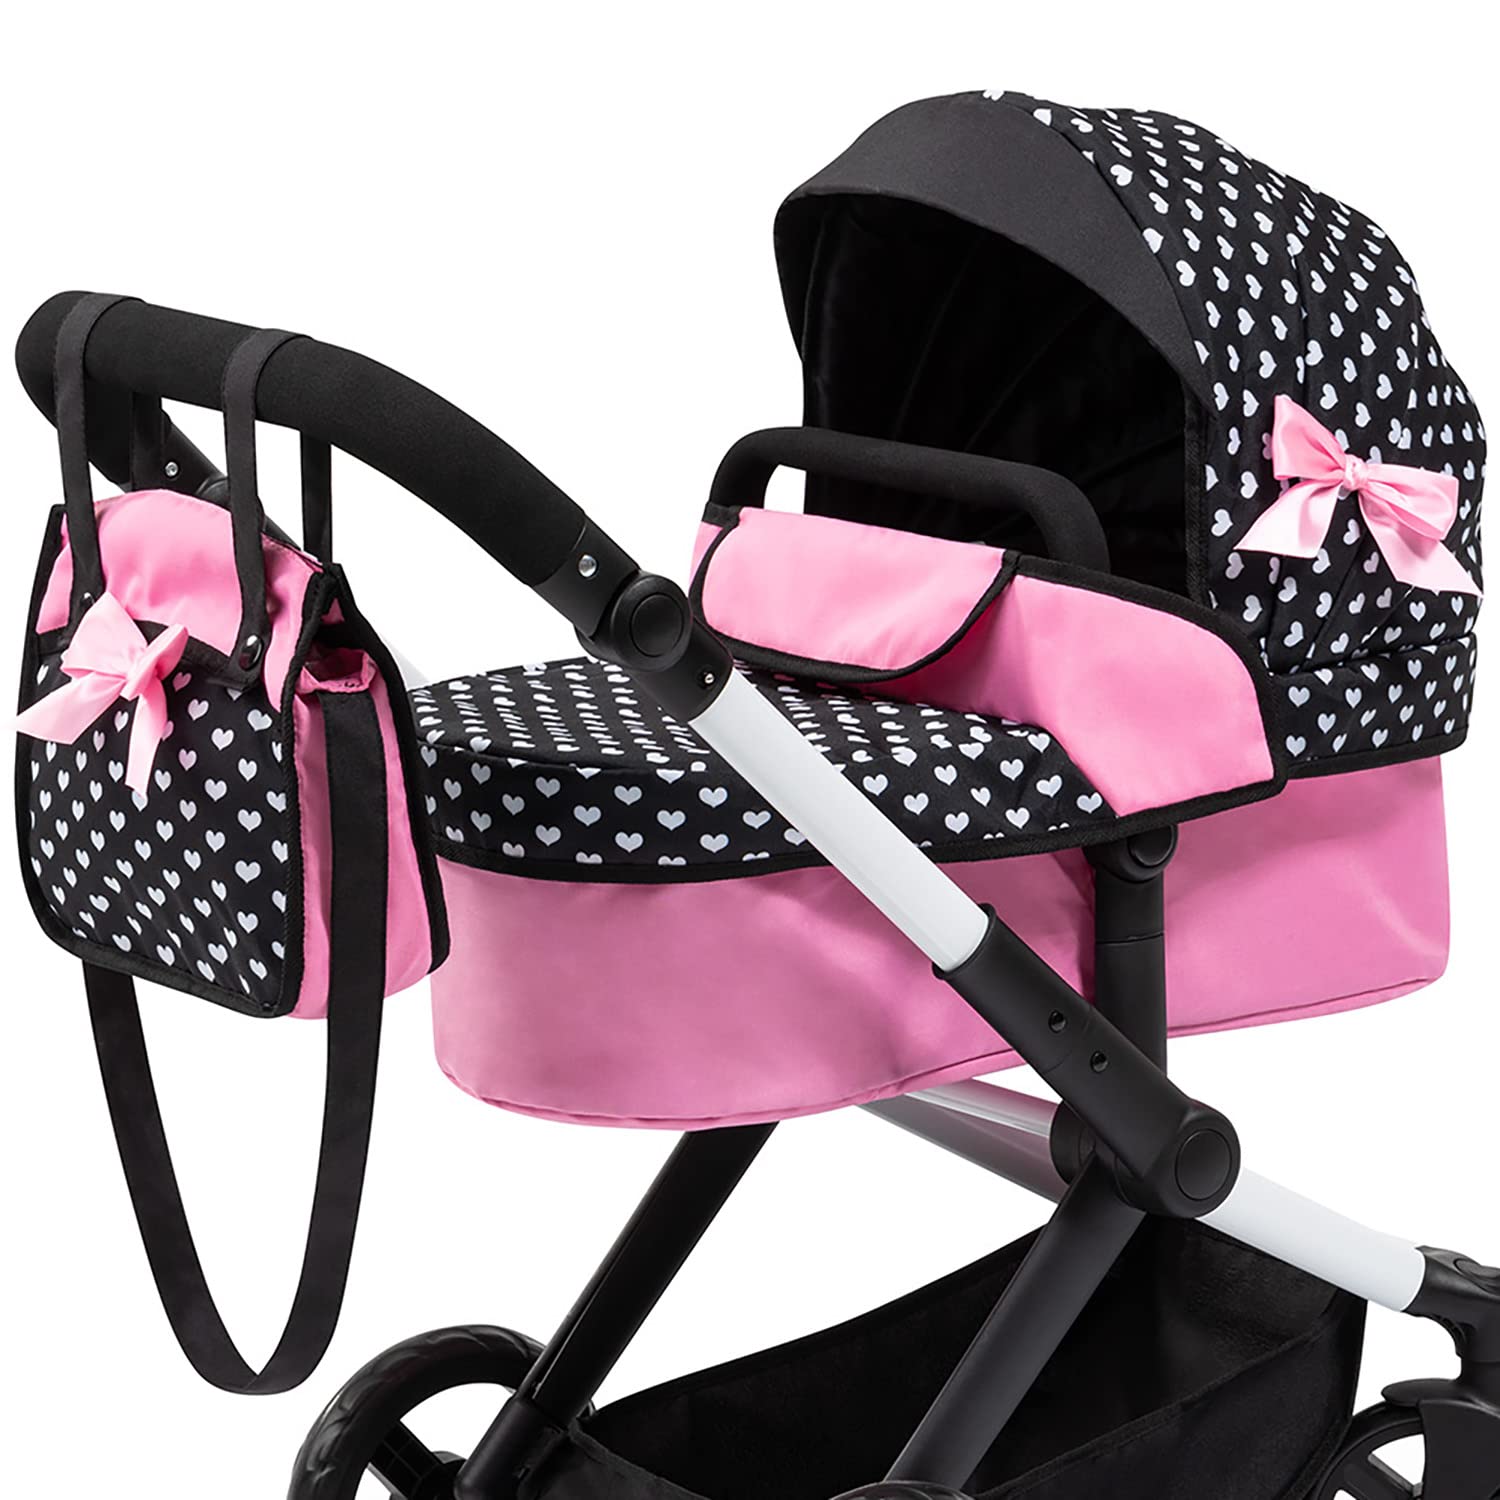 Bayer Design Dolls: Pram Xeo: Hearts Black & Pink - Matching Handbag, Adjustable Handle, for Dolls Up to 20